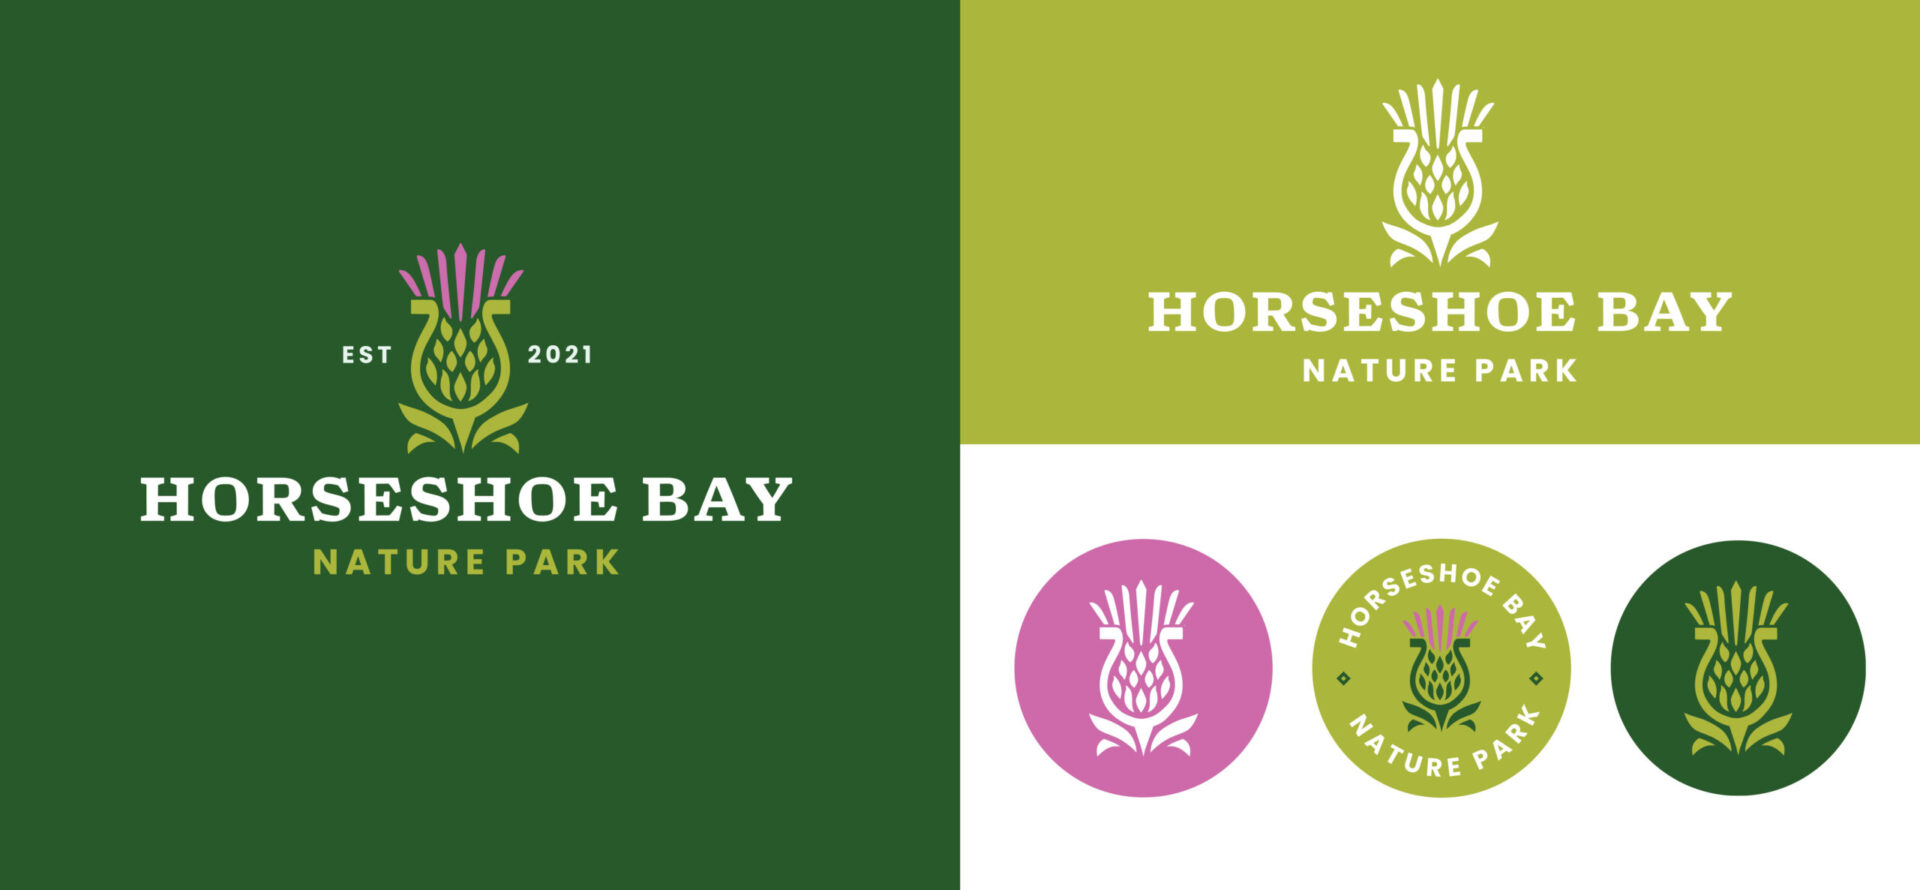 Horseshoe bay branding - logo and icons